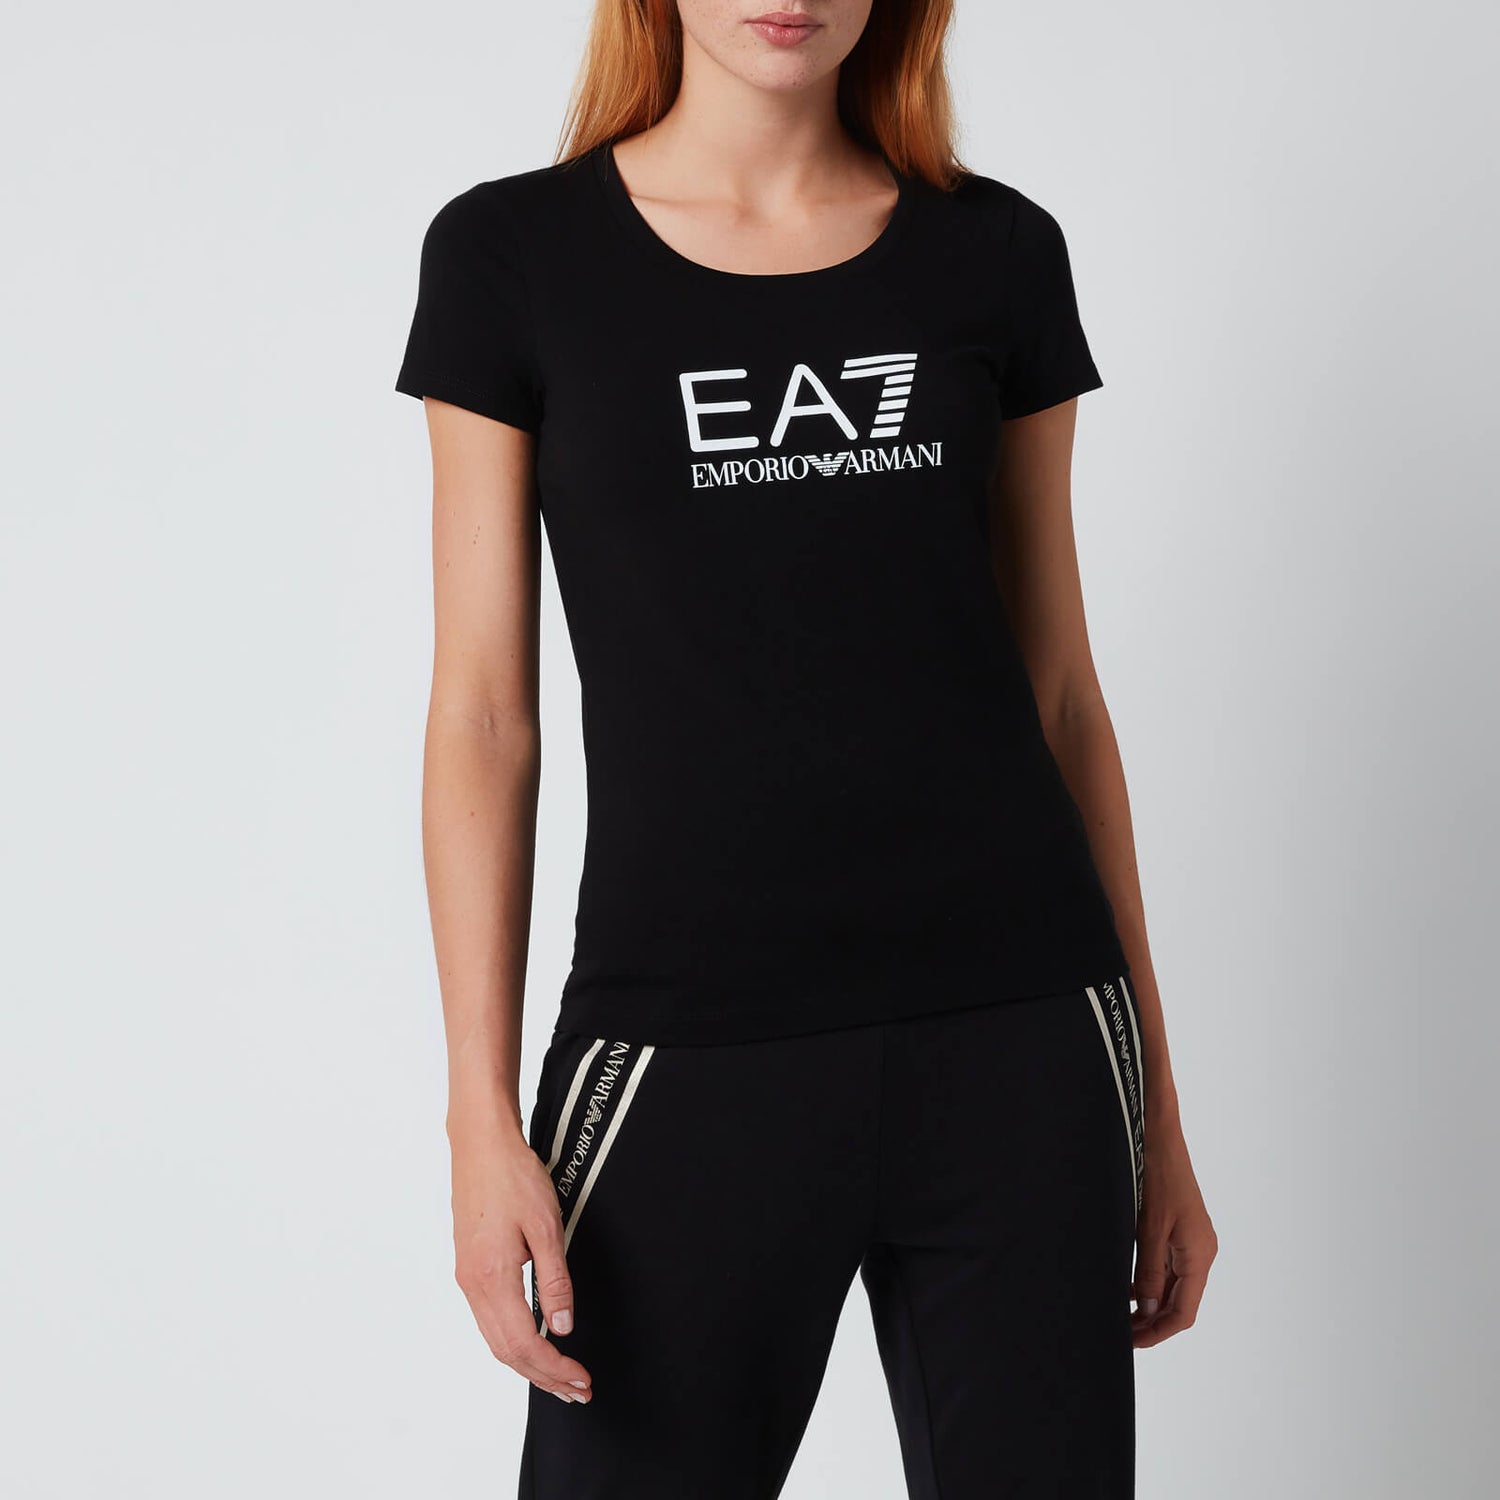 Emporio Armani EA7 Women's Train Shiny T-Shirt - Black - XS